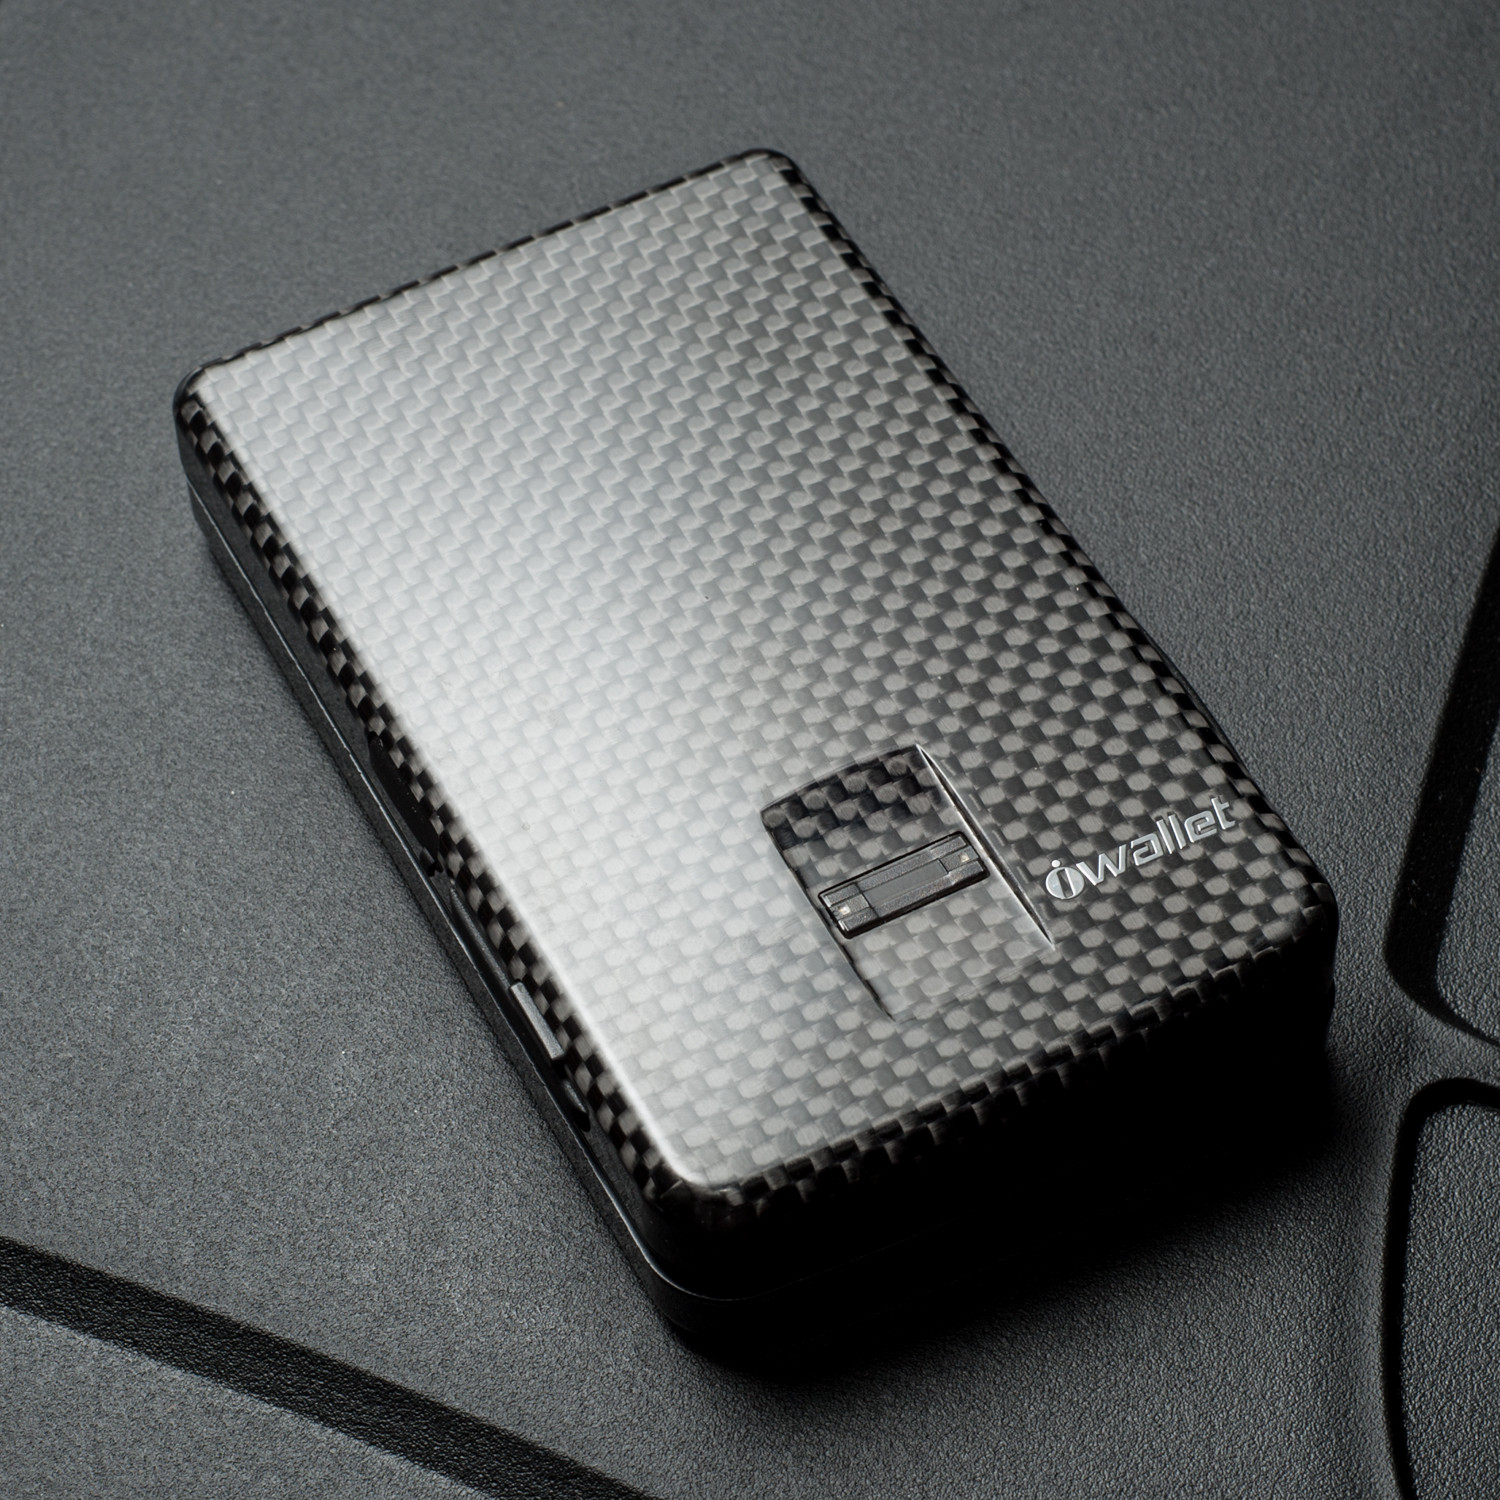 iWallet – Smart Wallet With Bluetooth and Fingerprint Reader